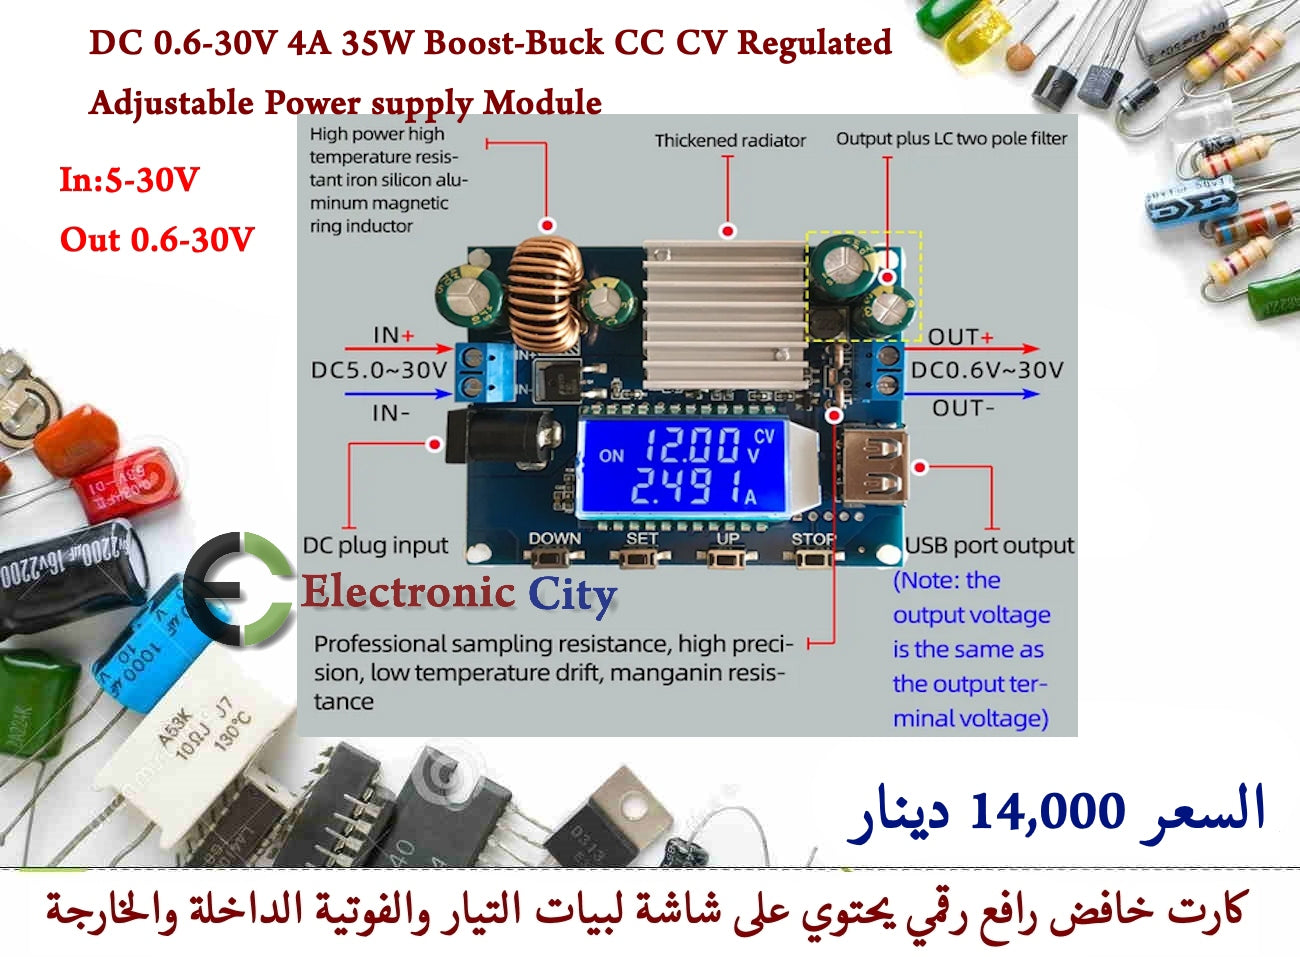 Regulated Power supply Module DC 0.6-30V 4A 35W #G2 XJ0033